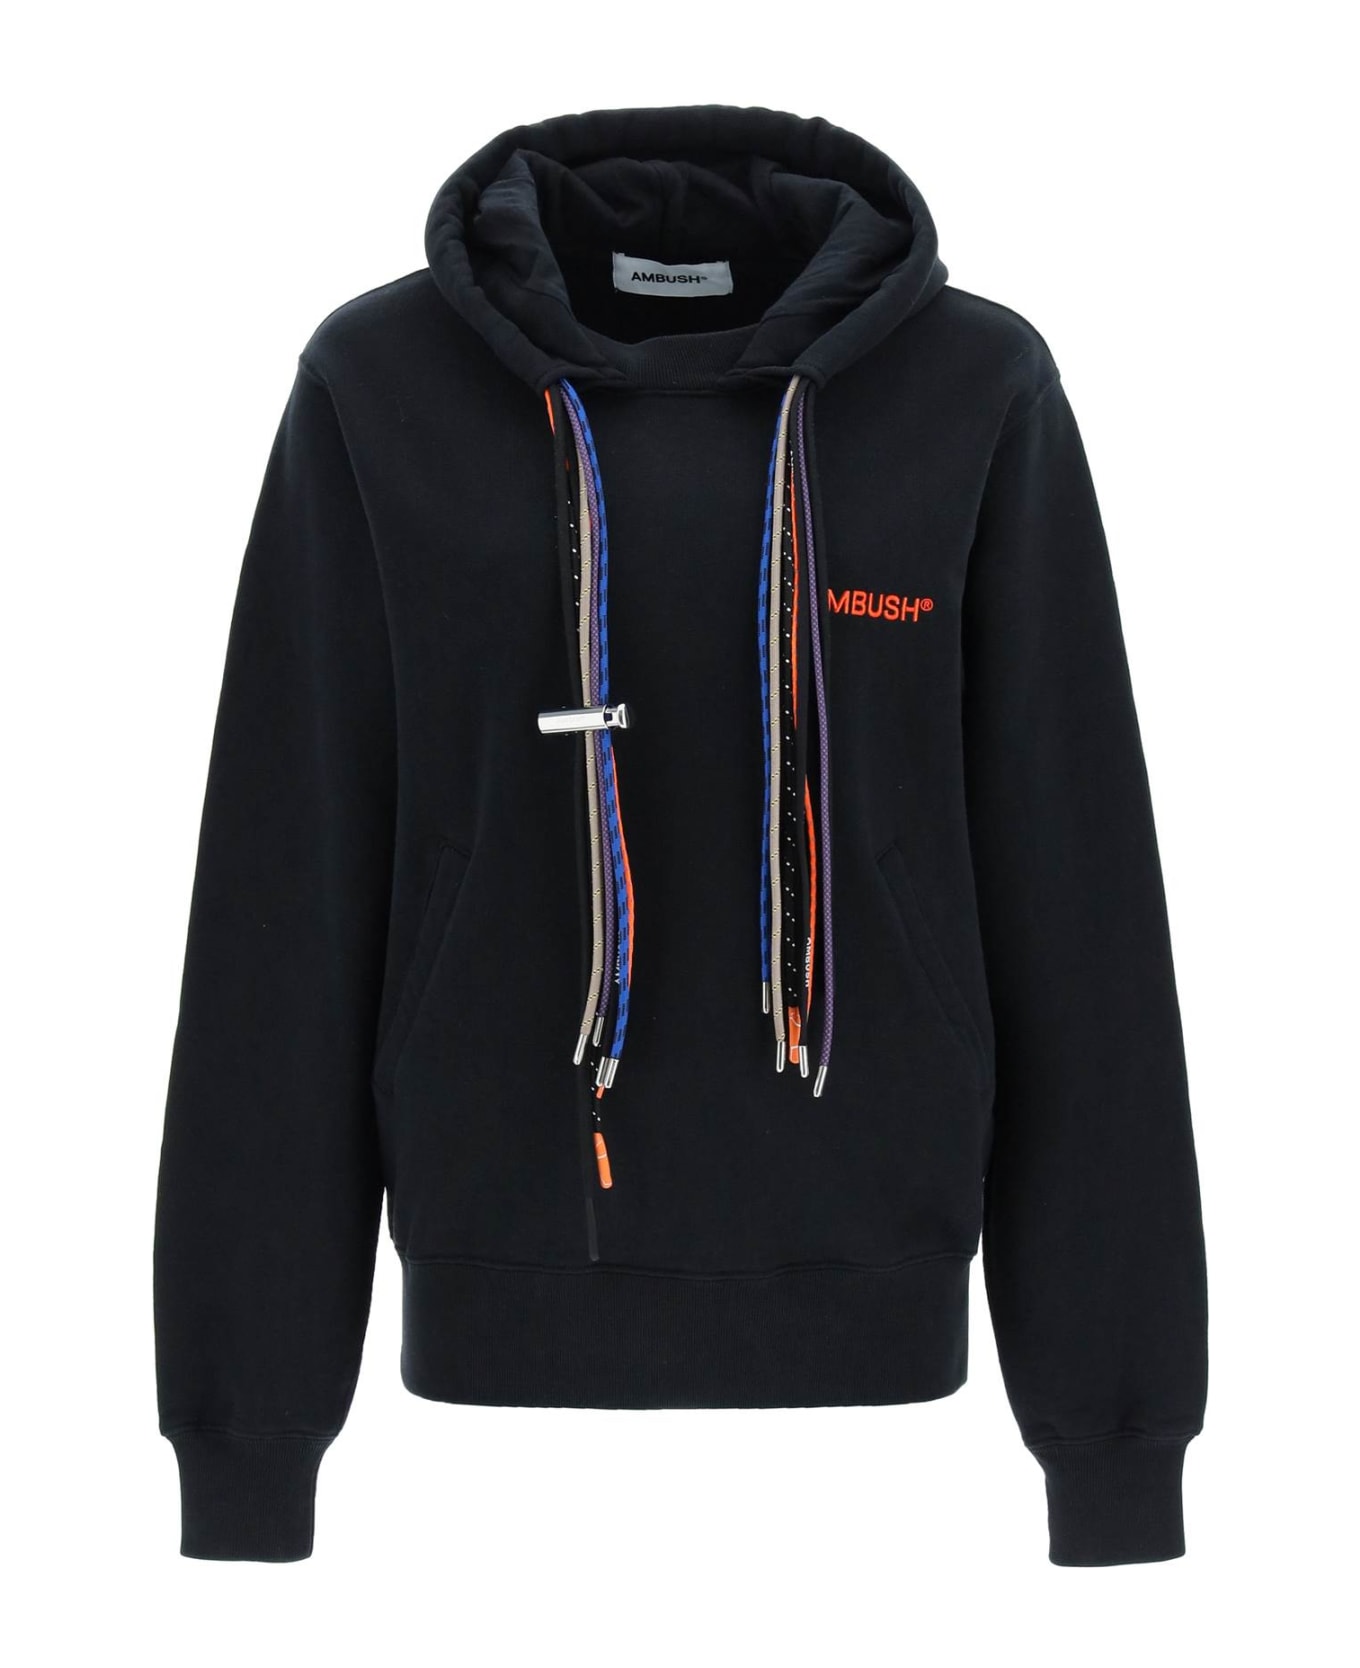 AMBUSH Multicord Sweatshirt - TAP SHOE ORANGE COM (Black)